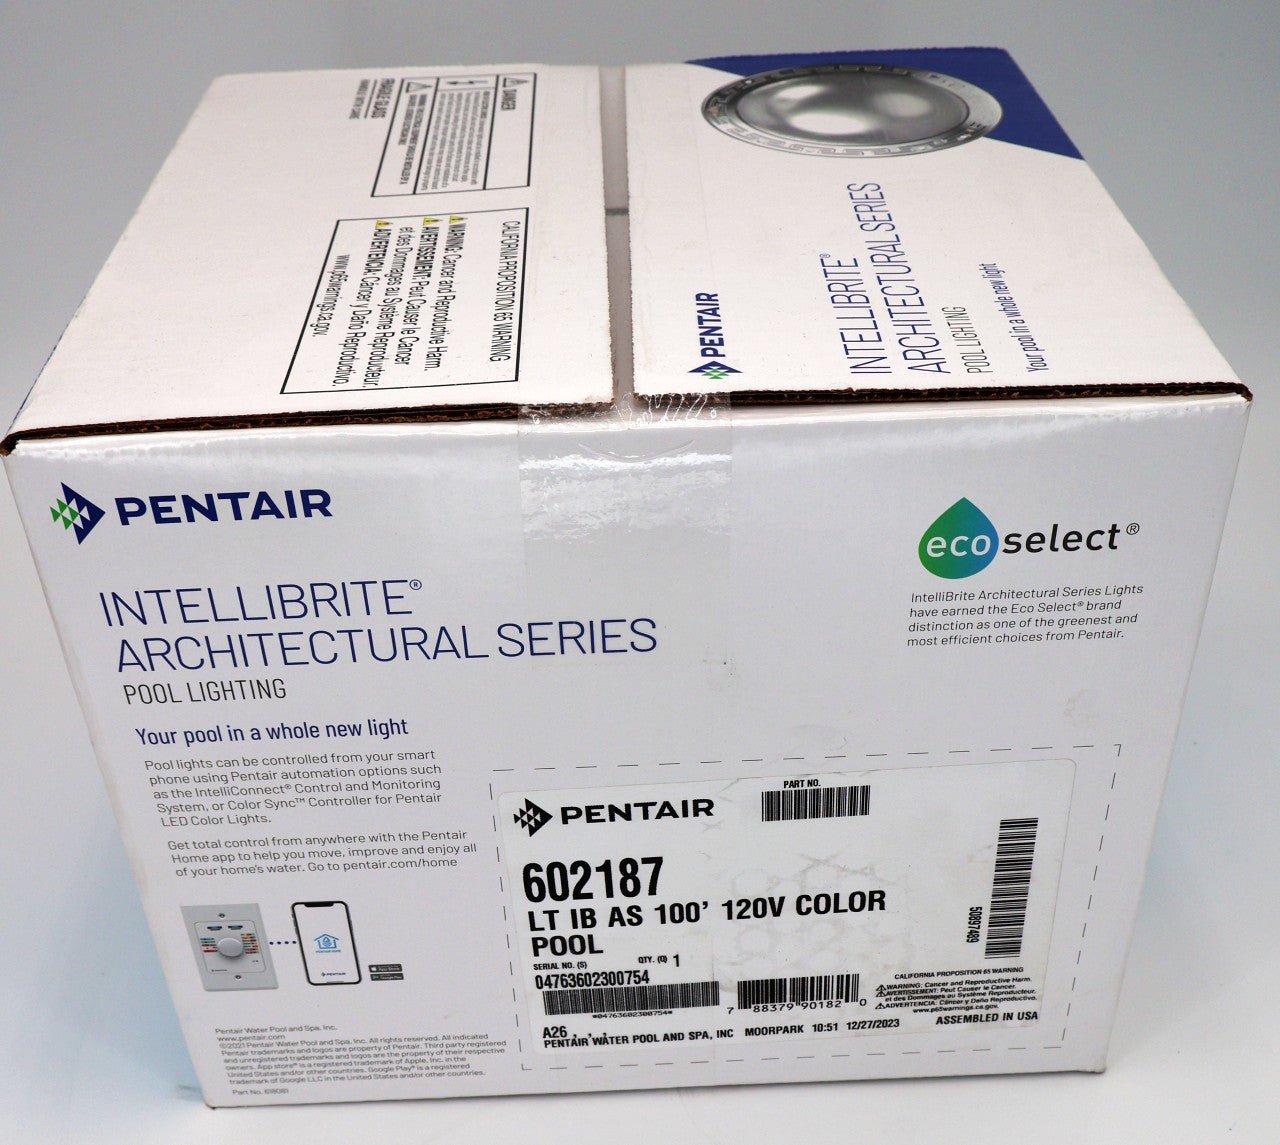 Pentair Intellibrite Architectural Series LED Pool Light RGBW 100' 120V 602187 - Pool Lights - img-6